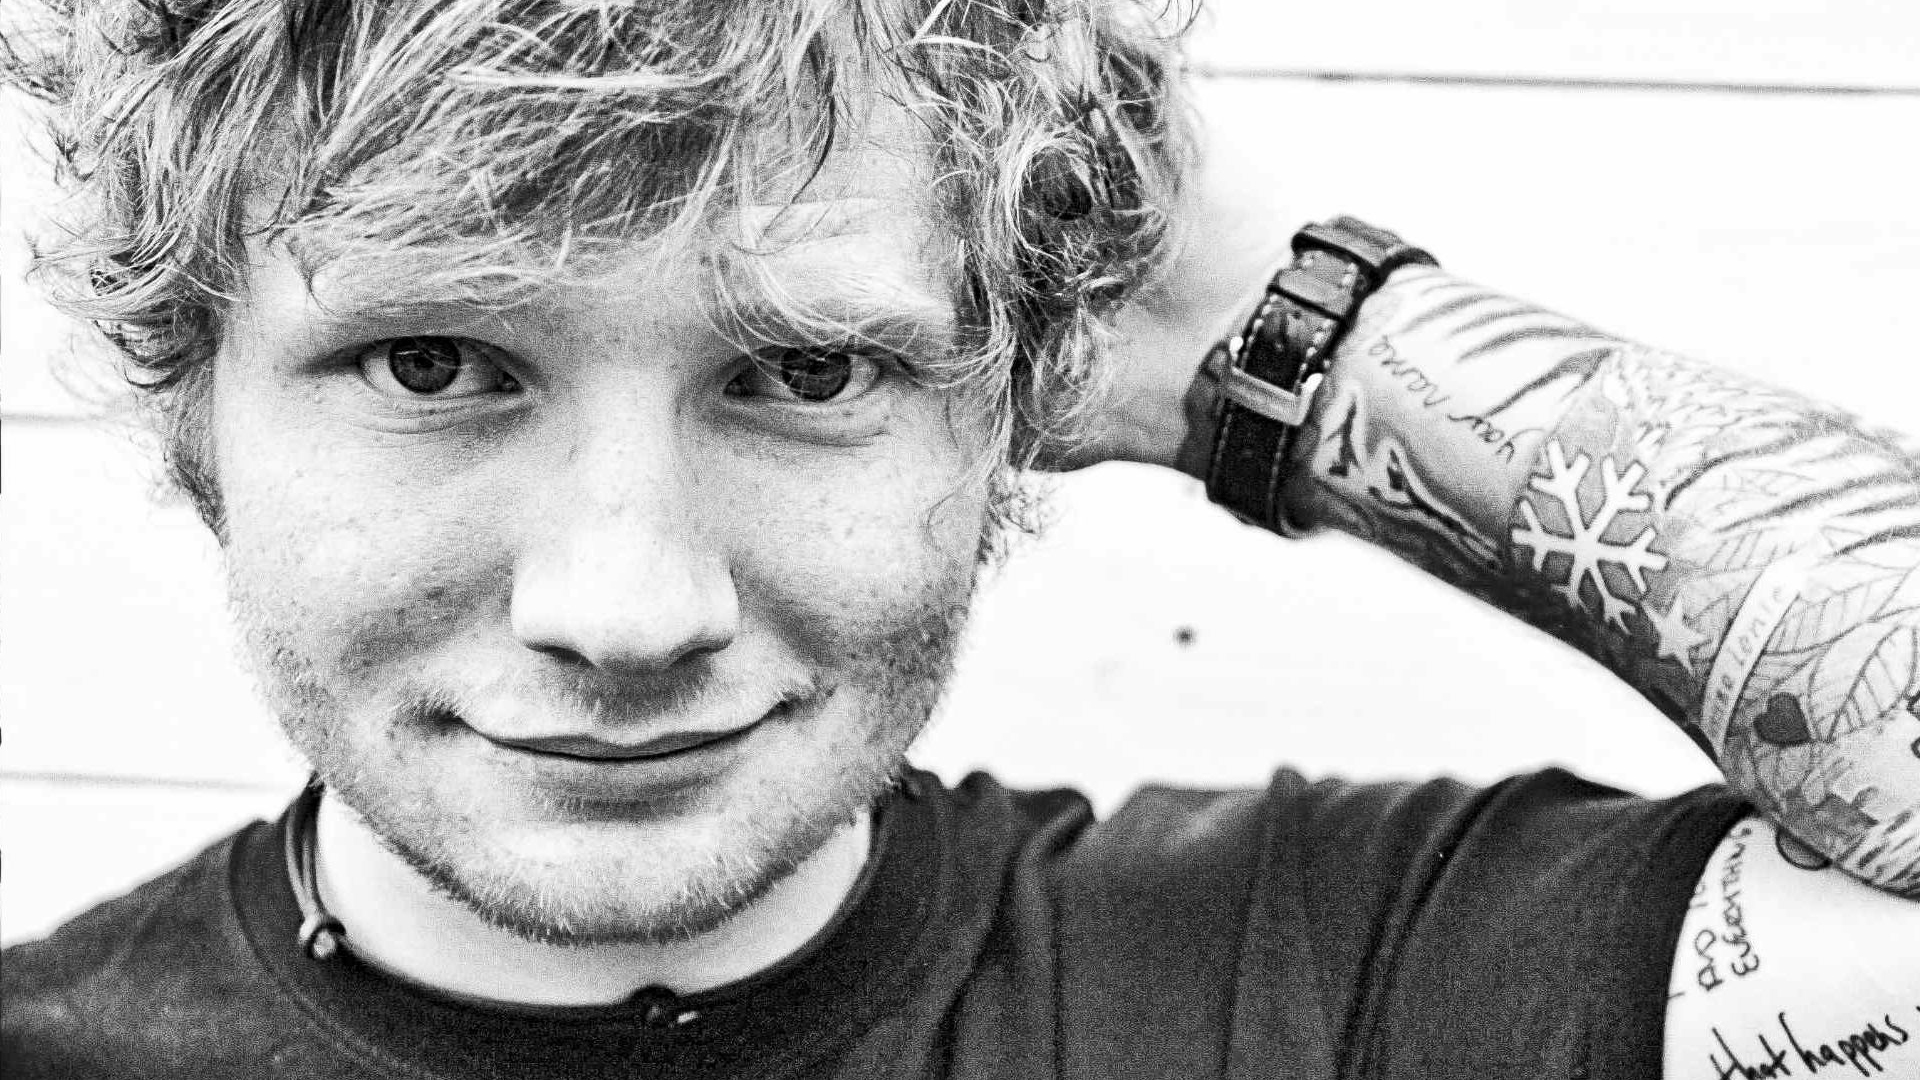 Ed Sheeran cracks 42 million monthly Spotify listeners